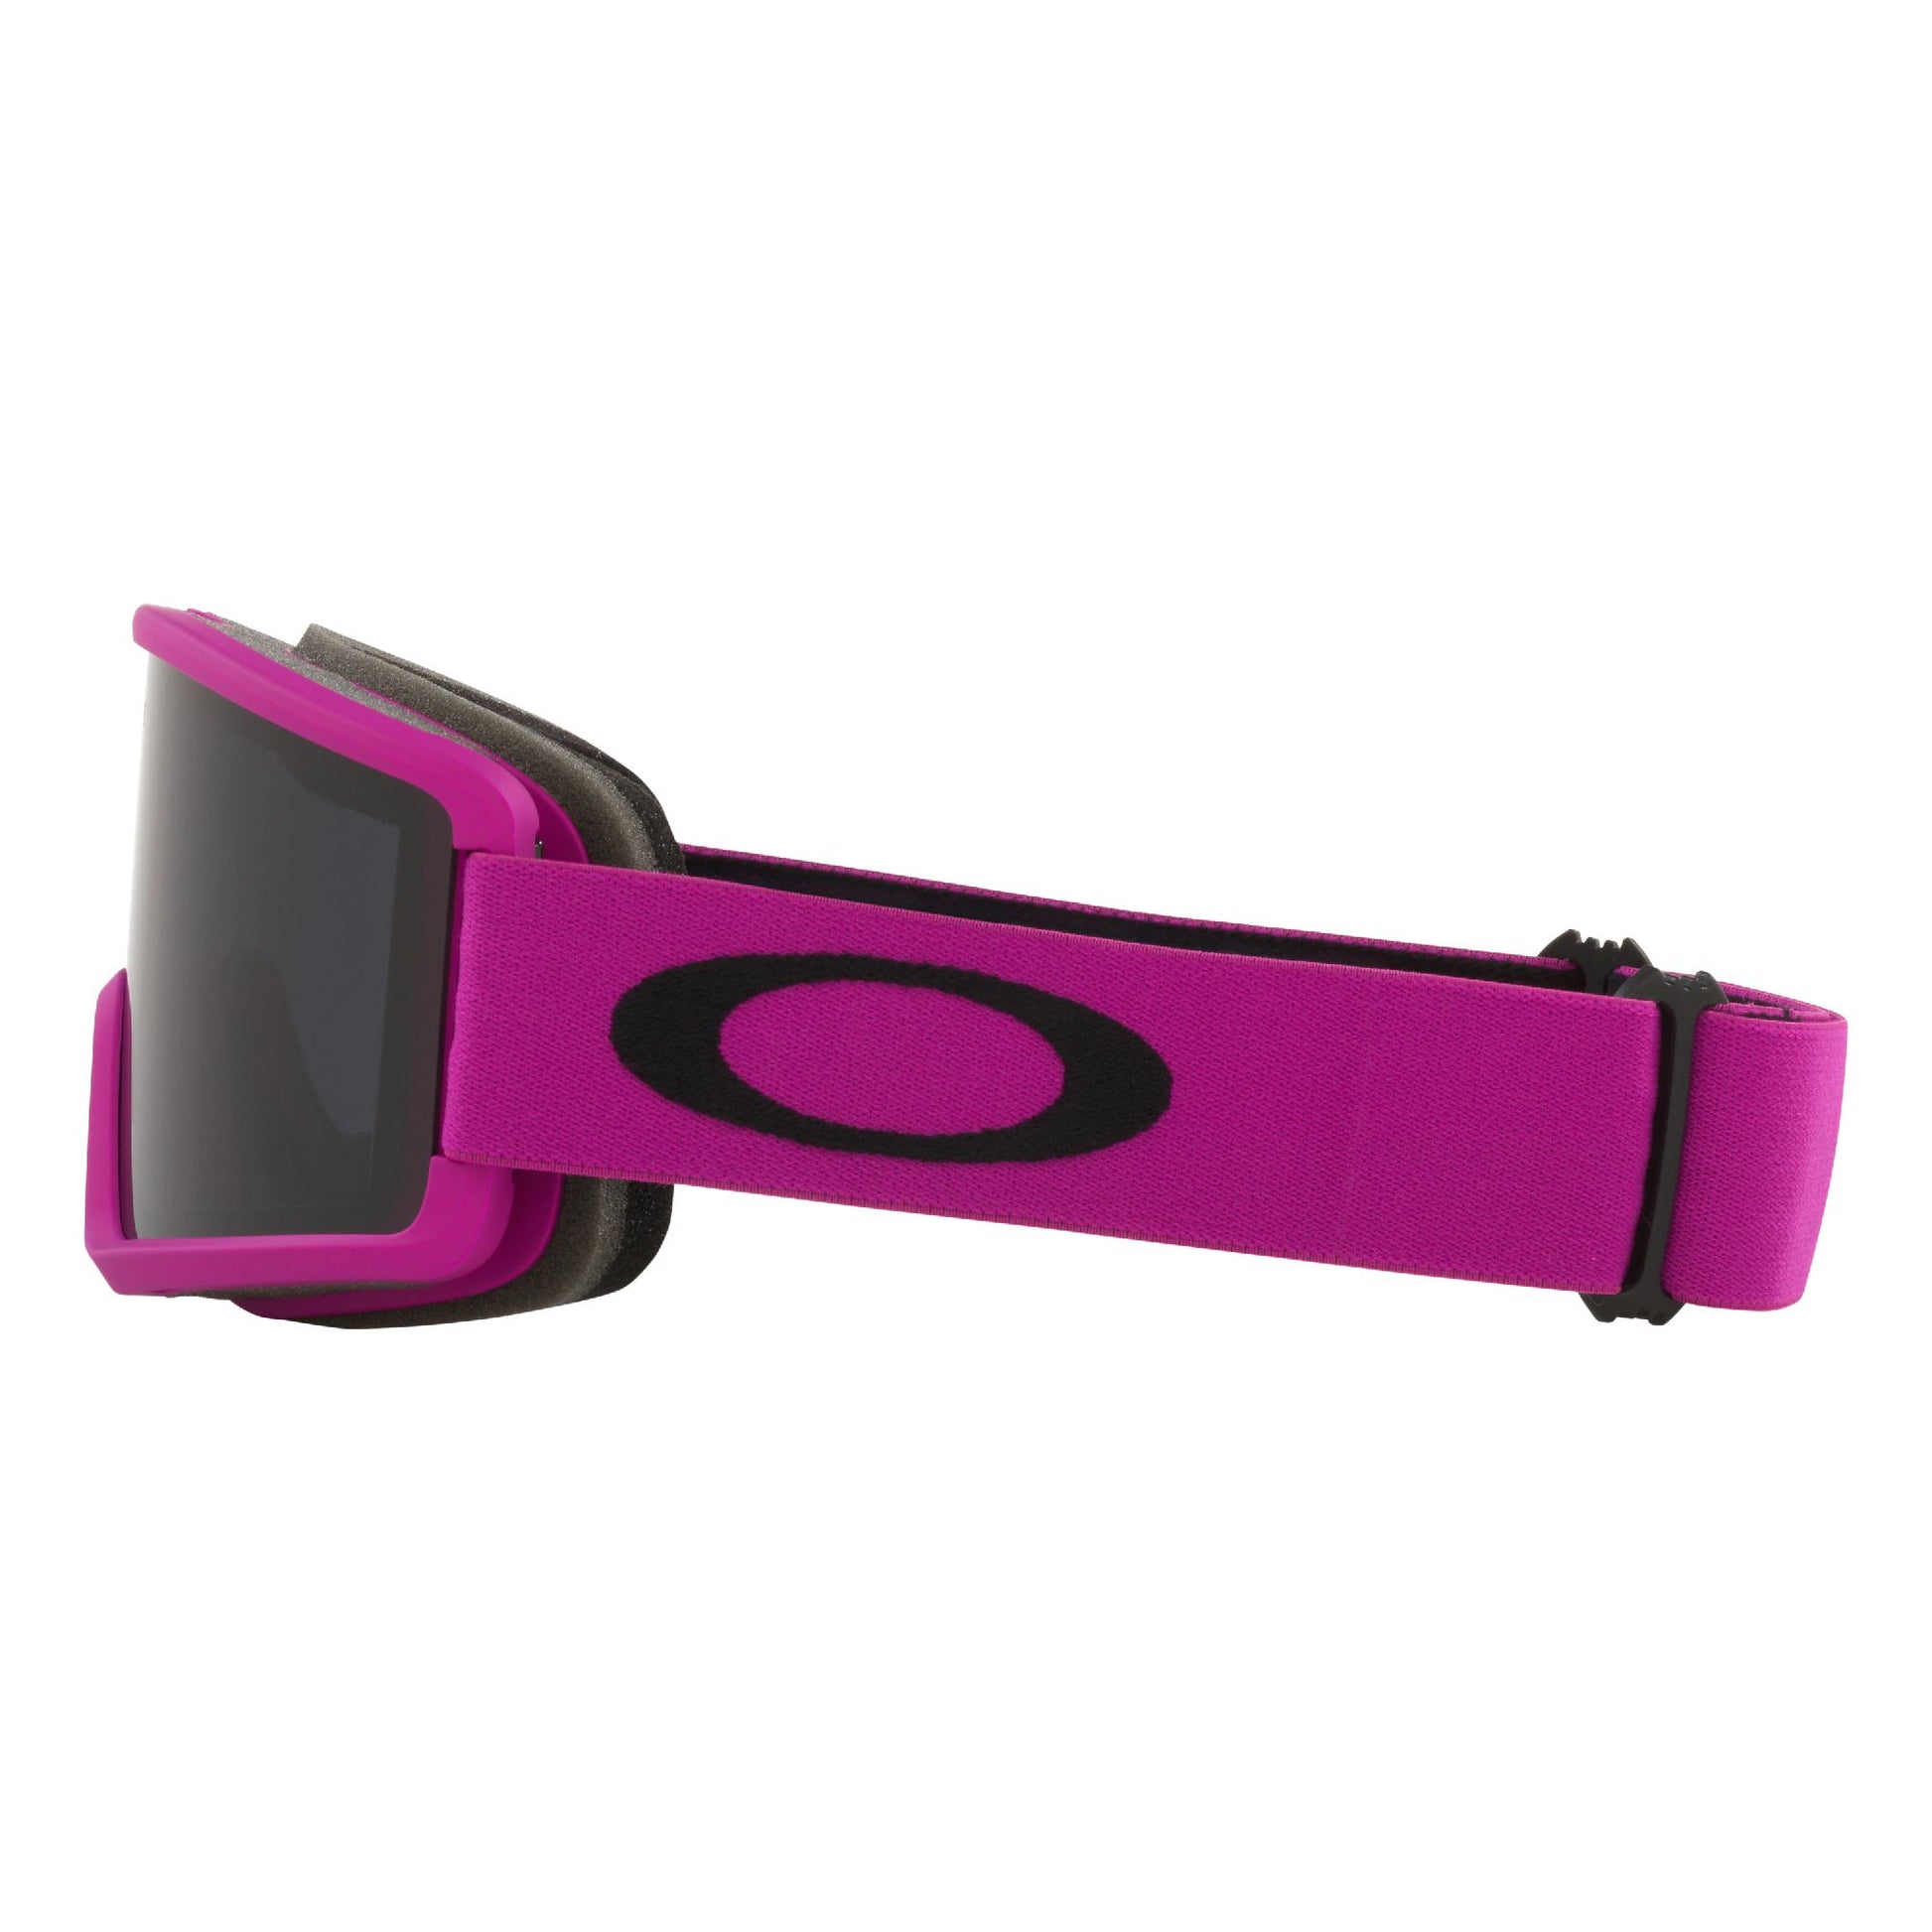 Oakley Target Line M Snow Goggles Ultra Purple Dark Grey Snow Goggles